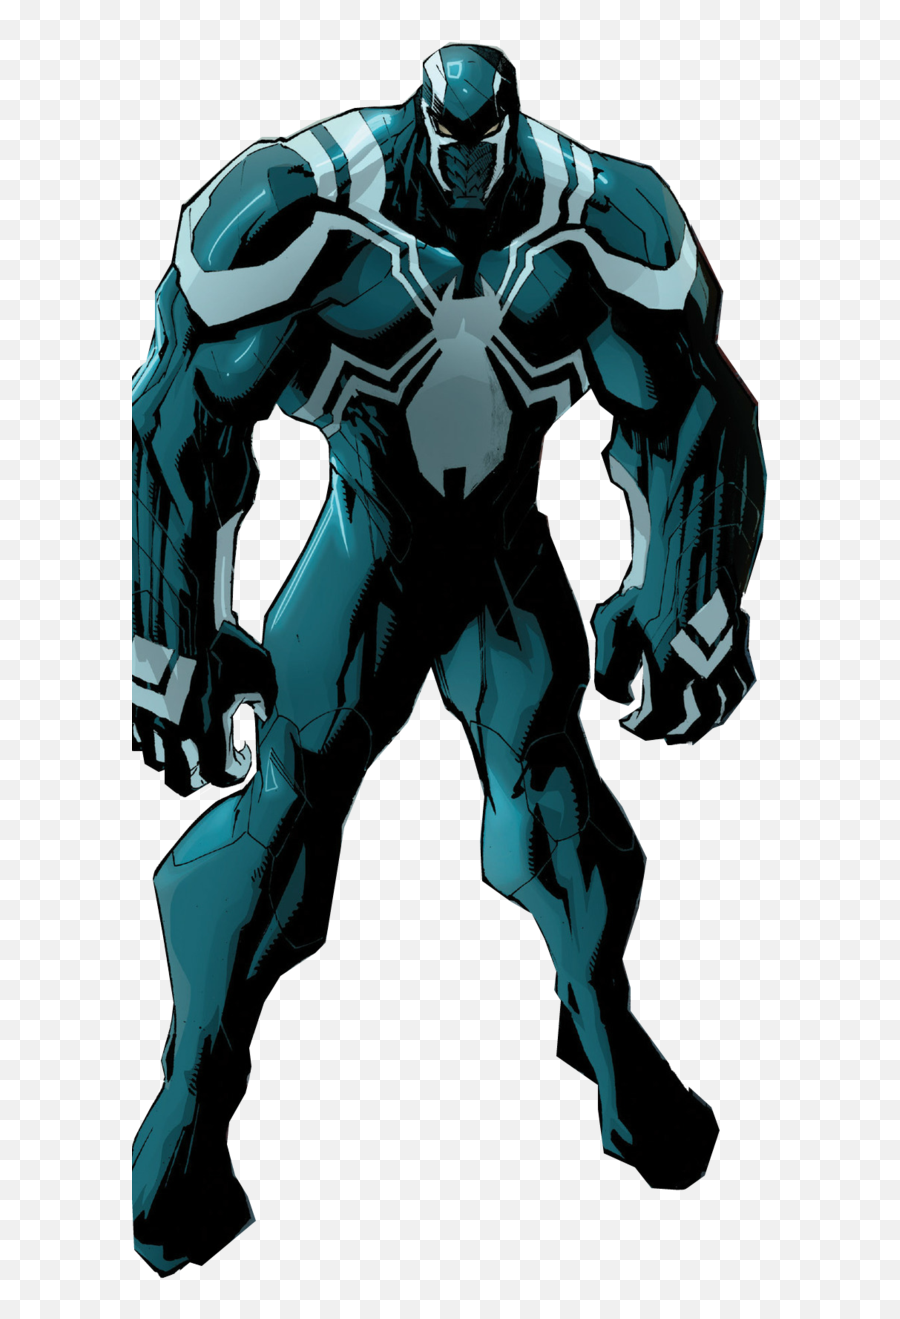 Venom Png Image - Marvel Agent Venom Space Knight,Venom Png